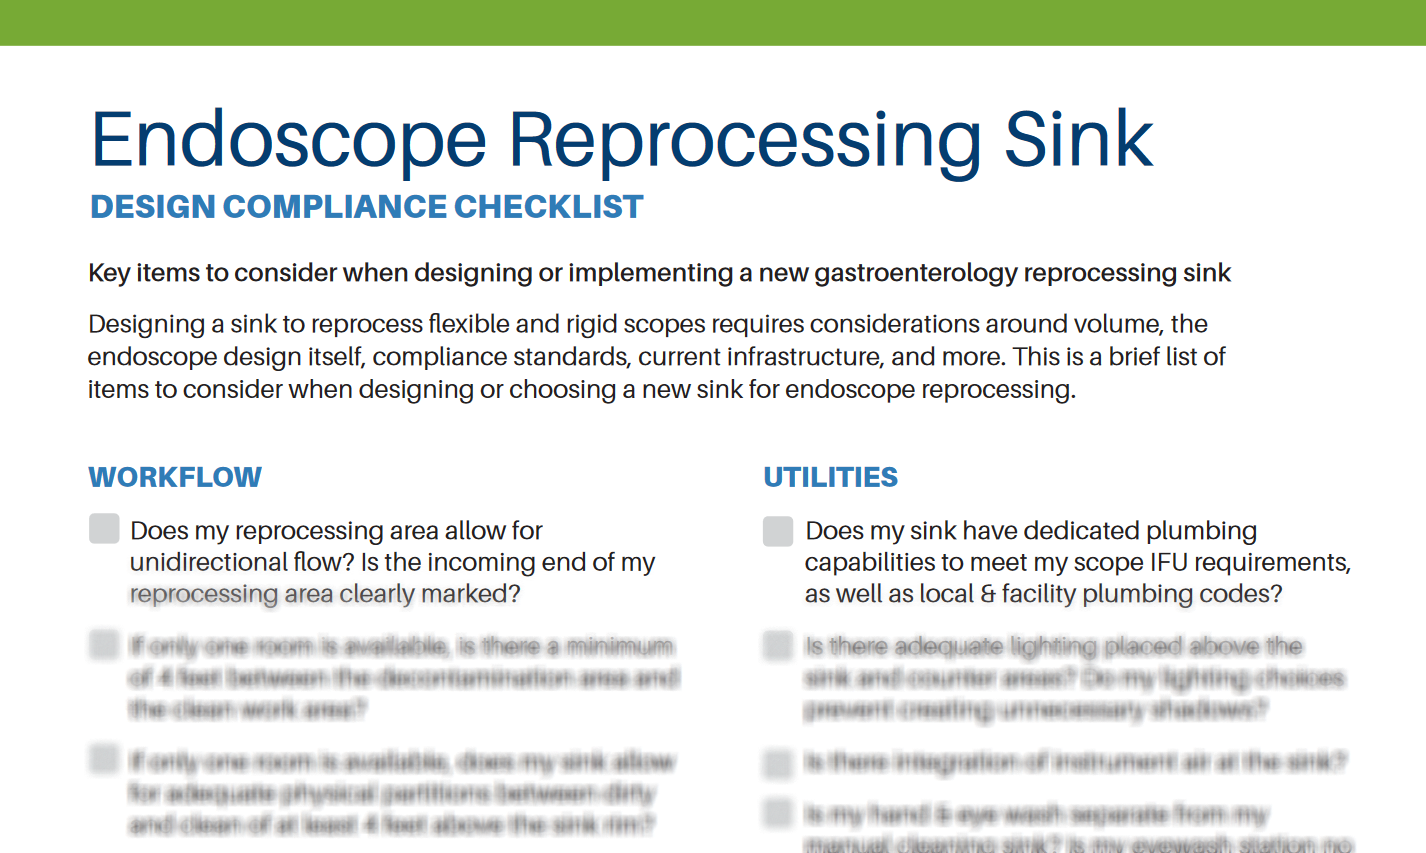 Endo reprocessing sink checklist teaser